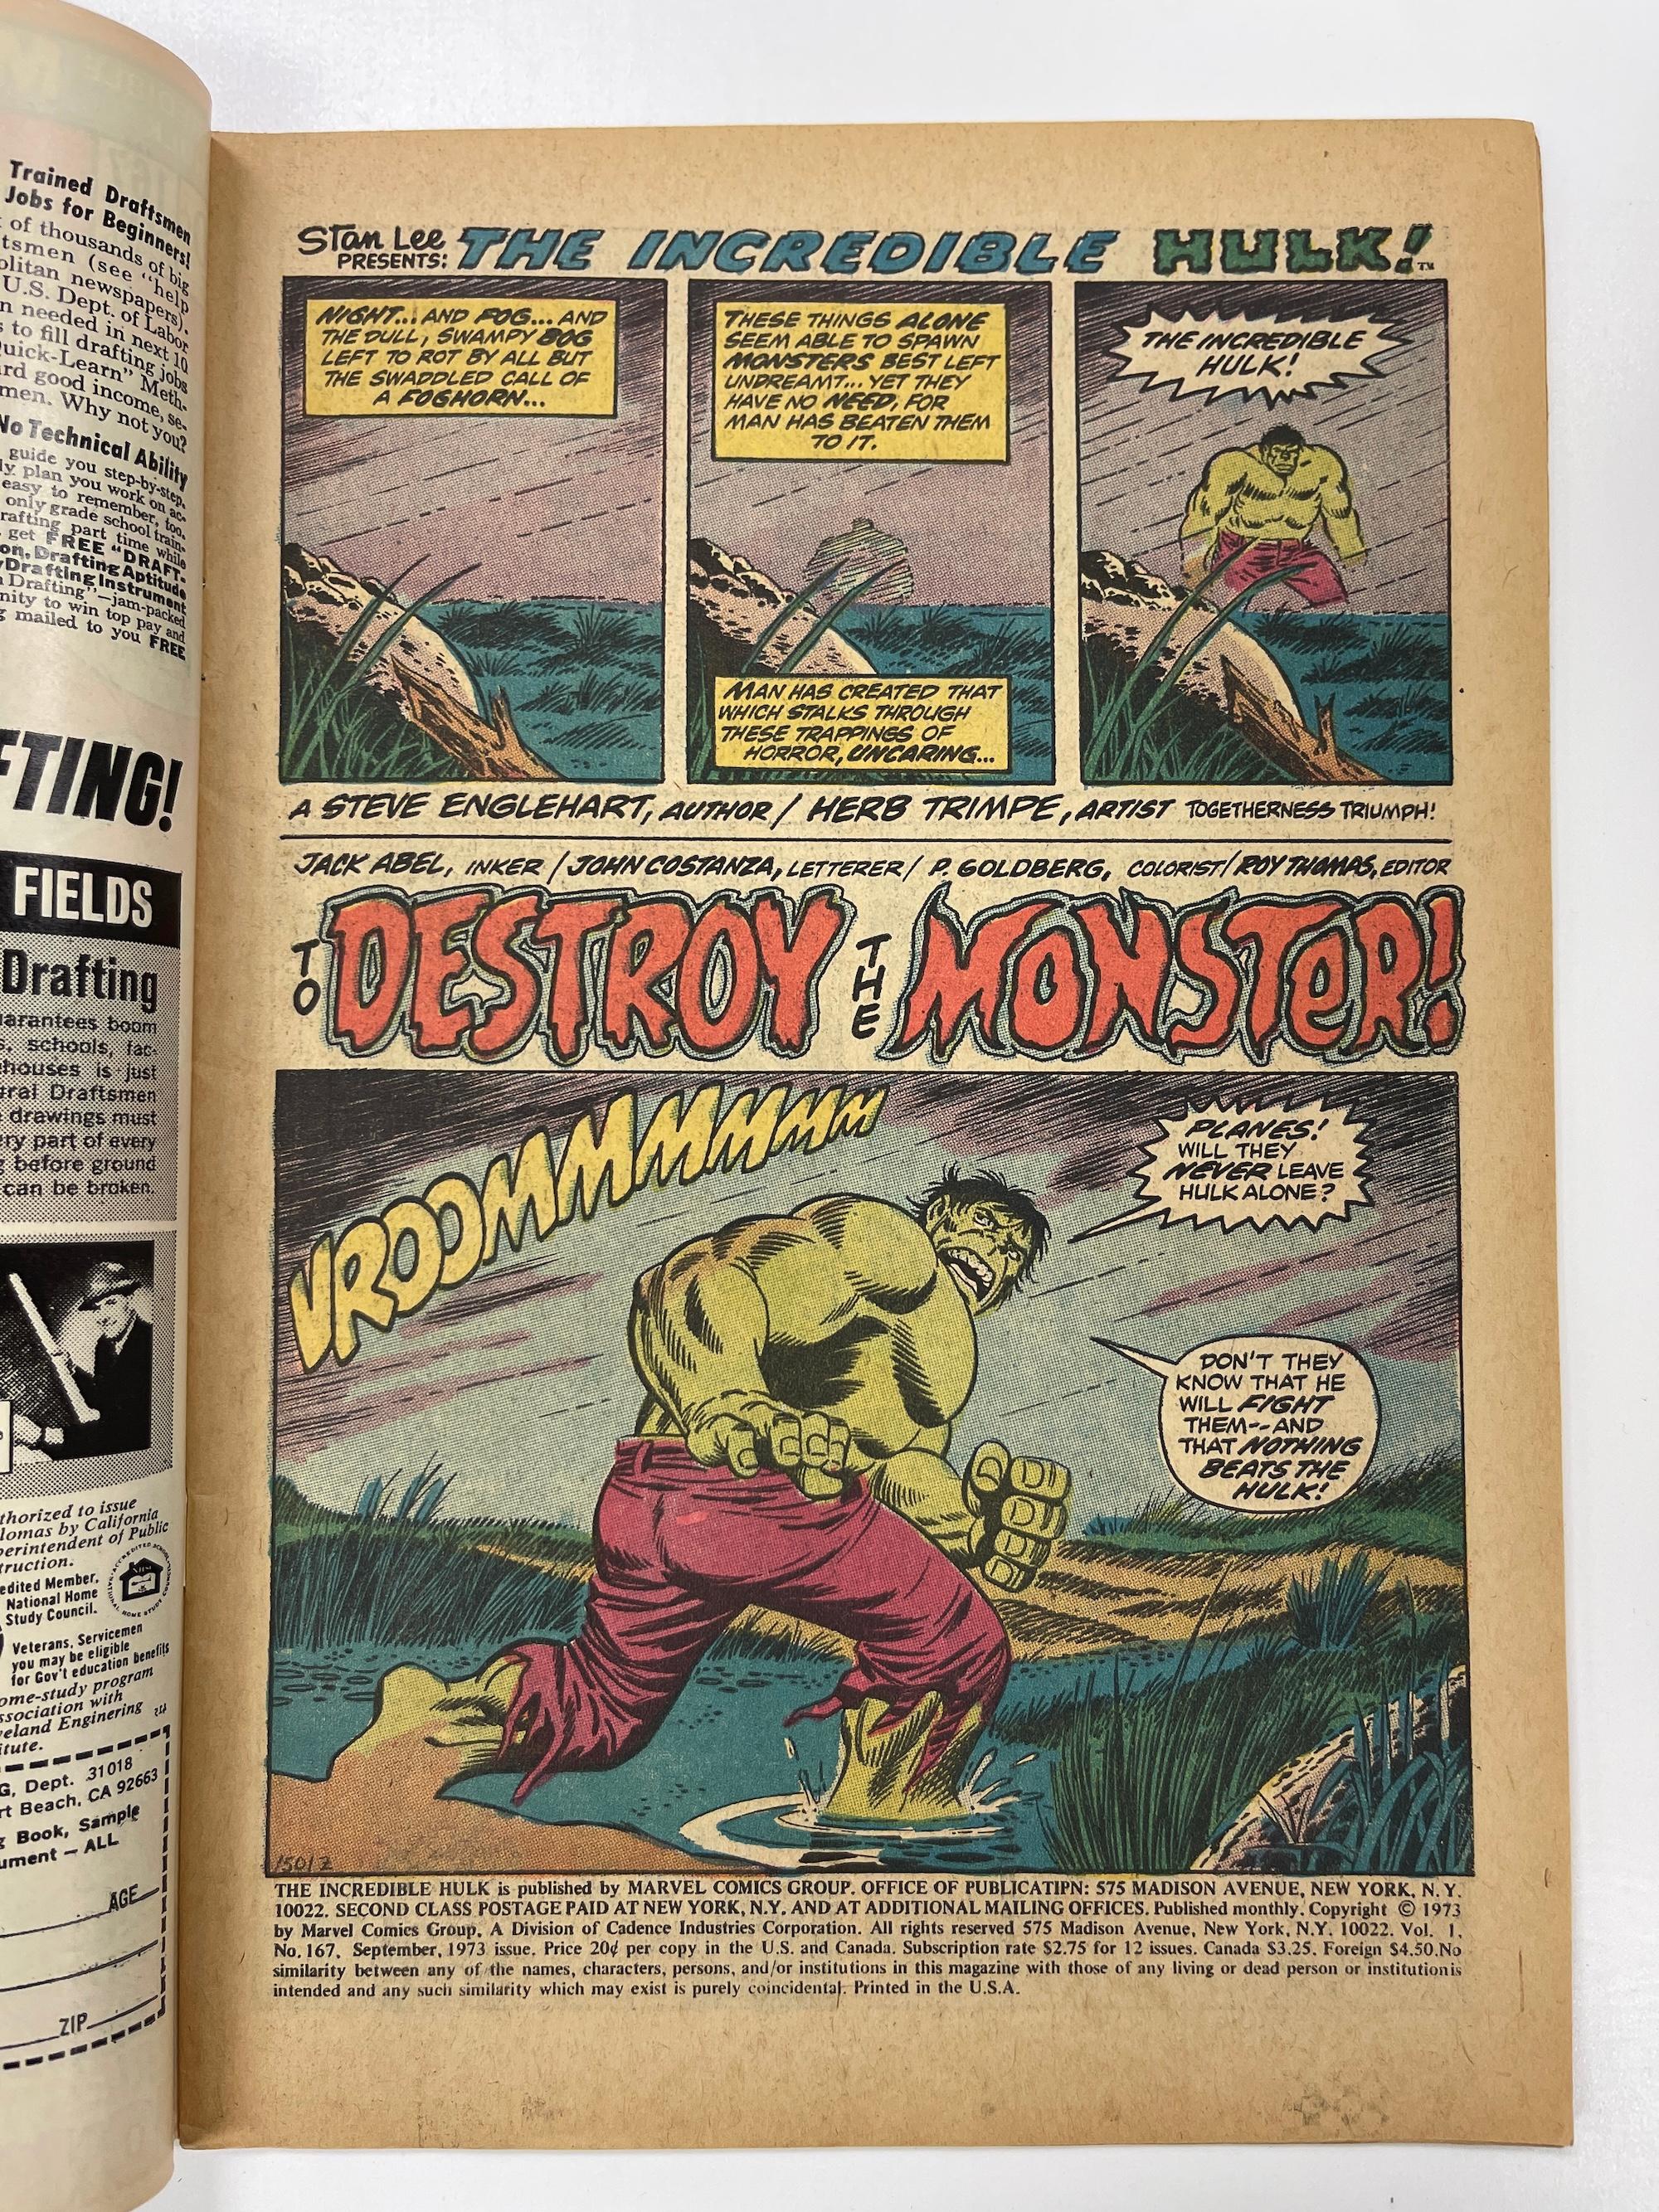 INCREDIBLE HULK #167 SEPTEMBER 1973 MODOK "DESTROY! CRIES THE MONSTER"